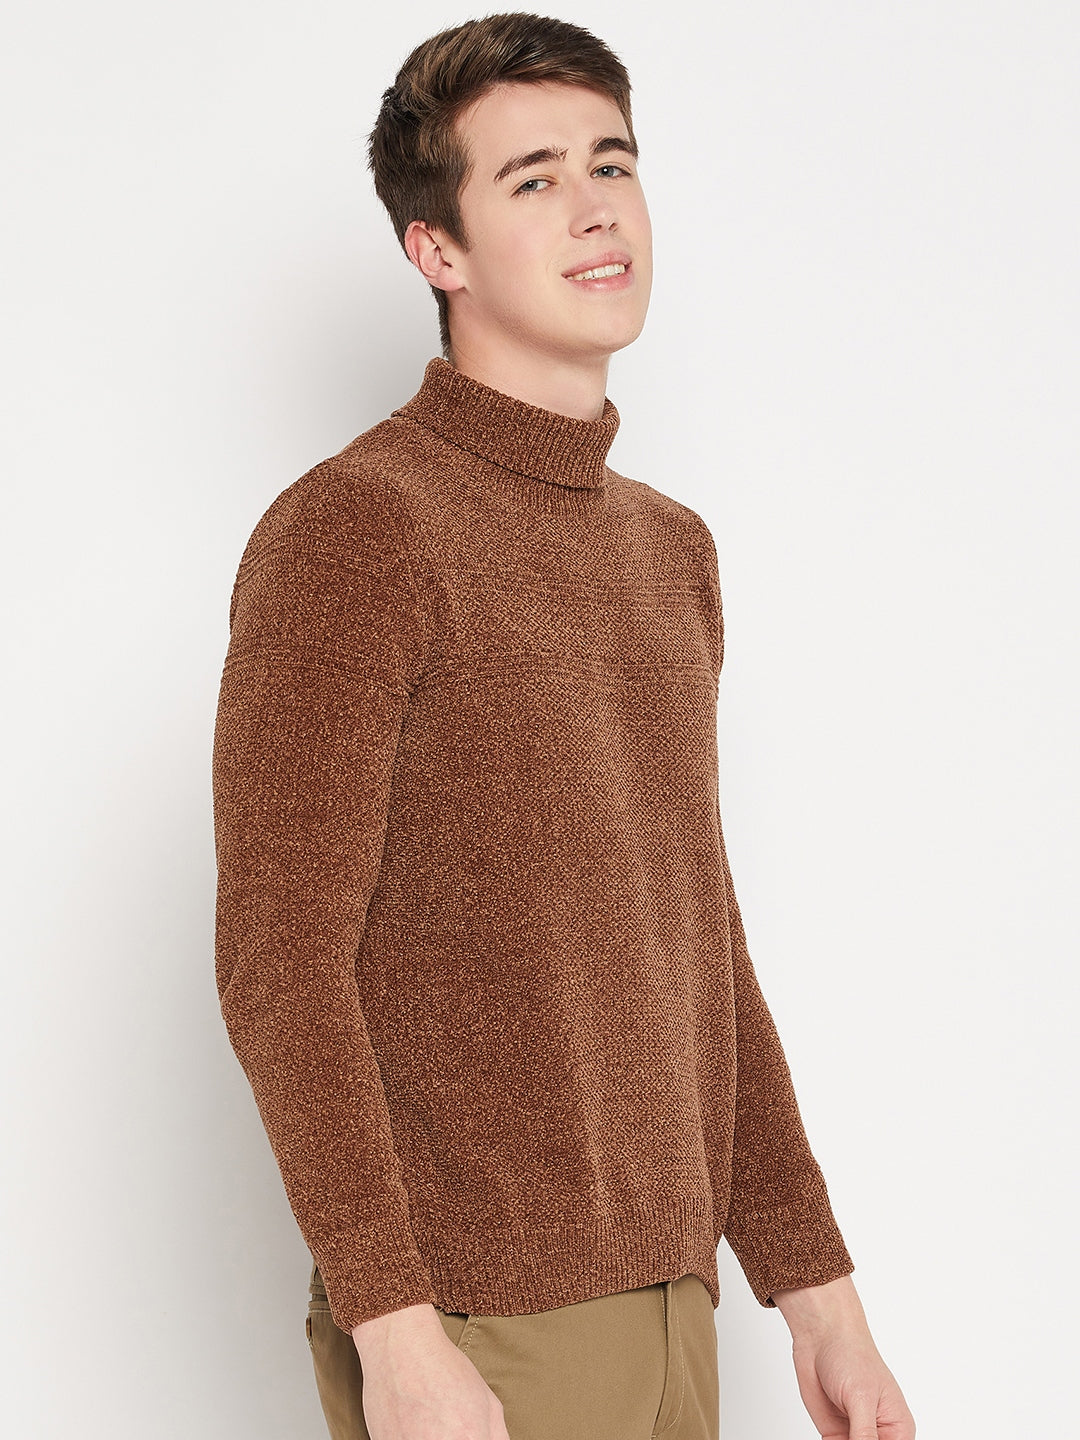 Camla Barcelona Brown Sweater For Men